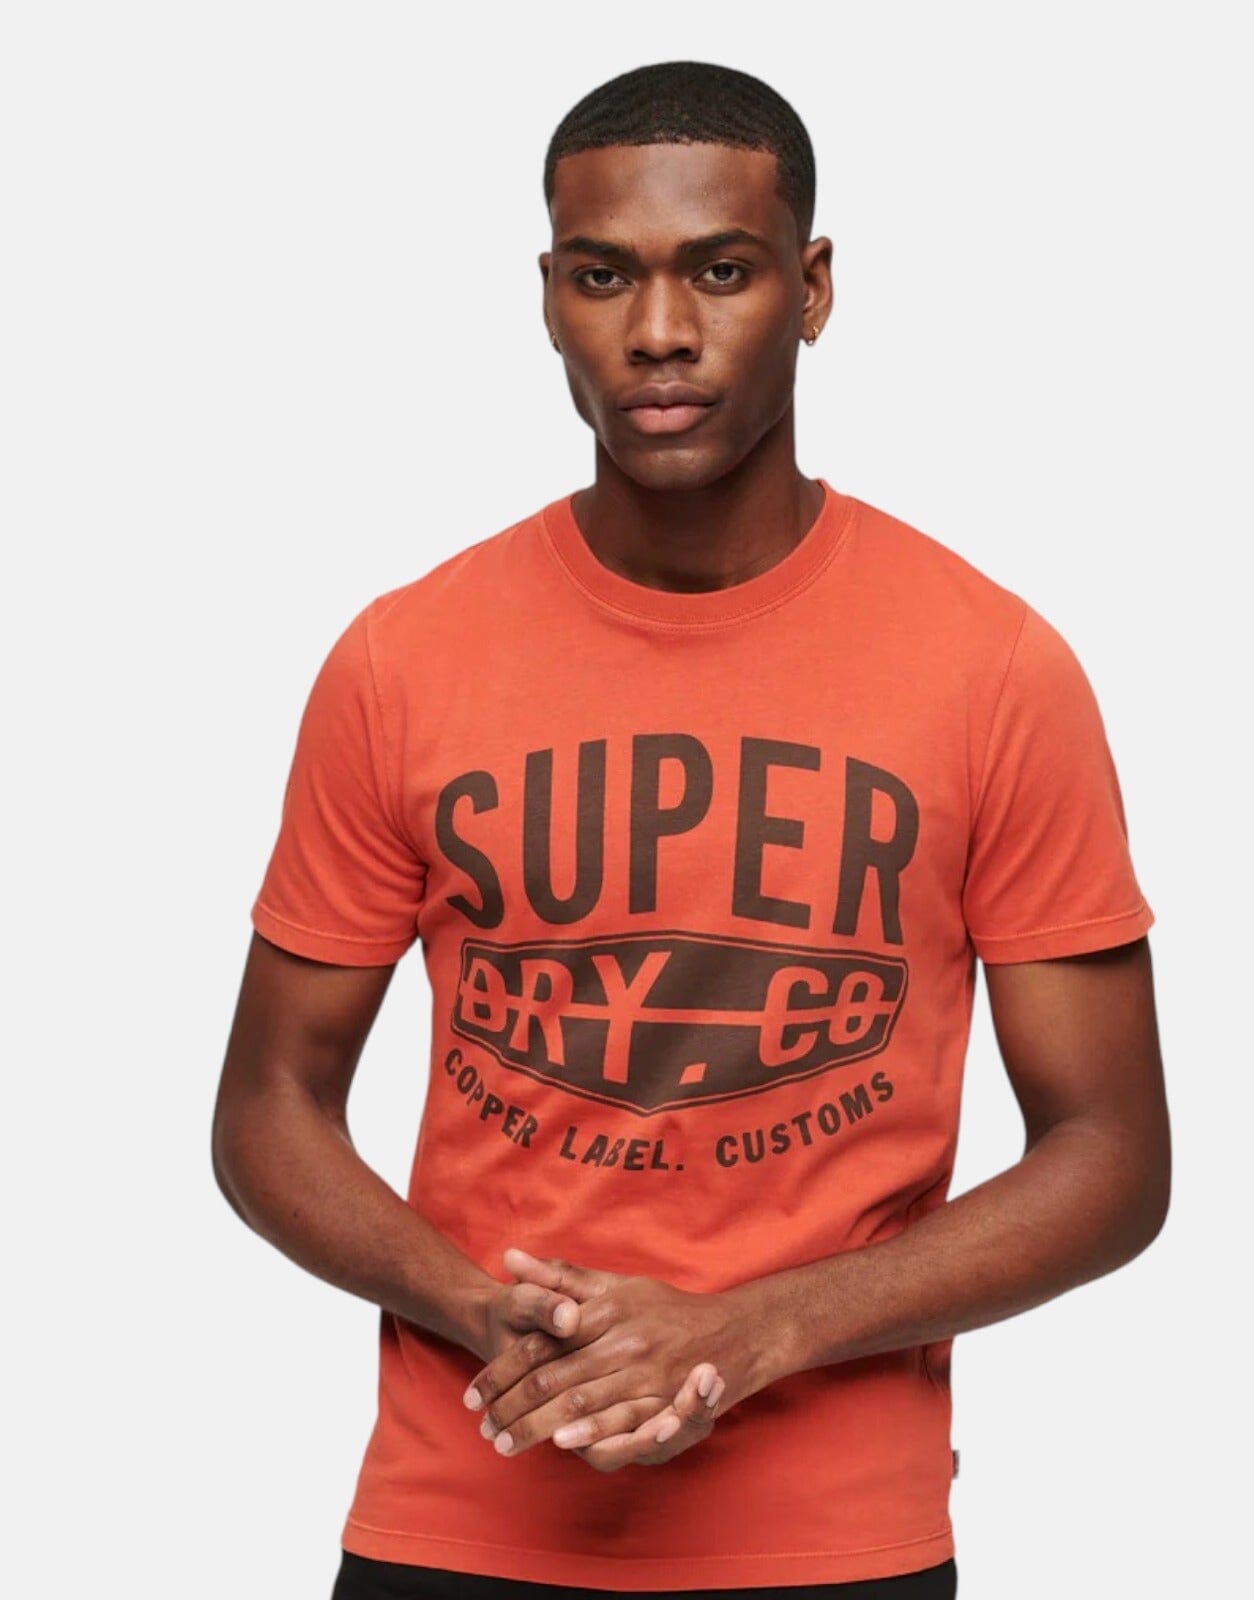 Superdry Organic Cotton Vintage Copper Label T-Shirt - Subwear